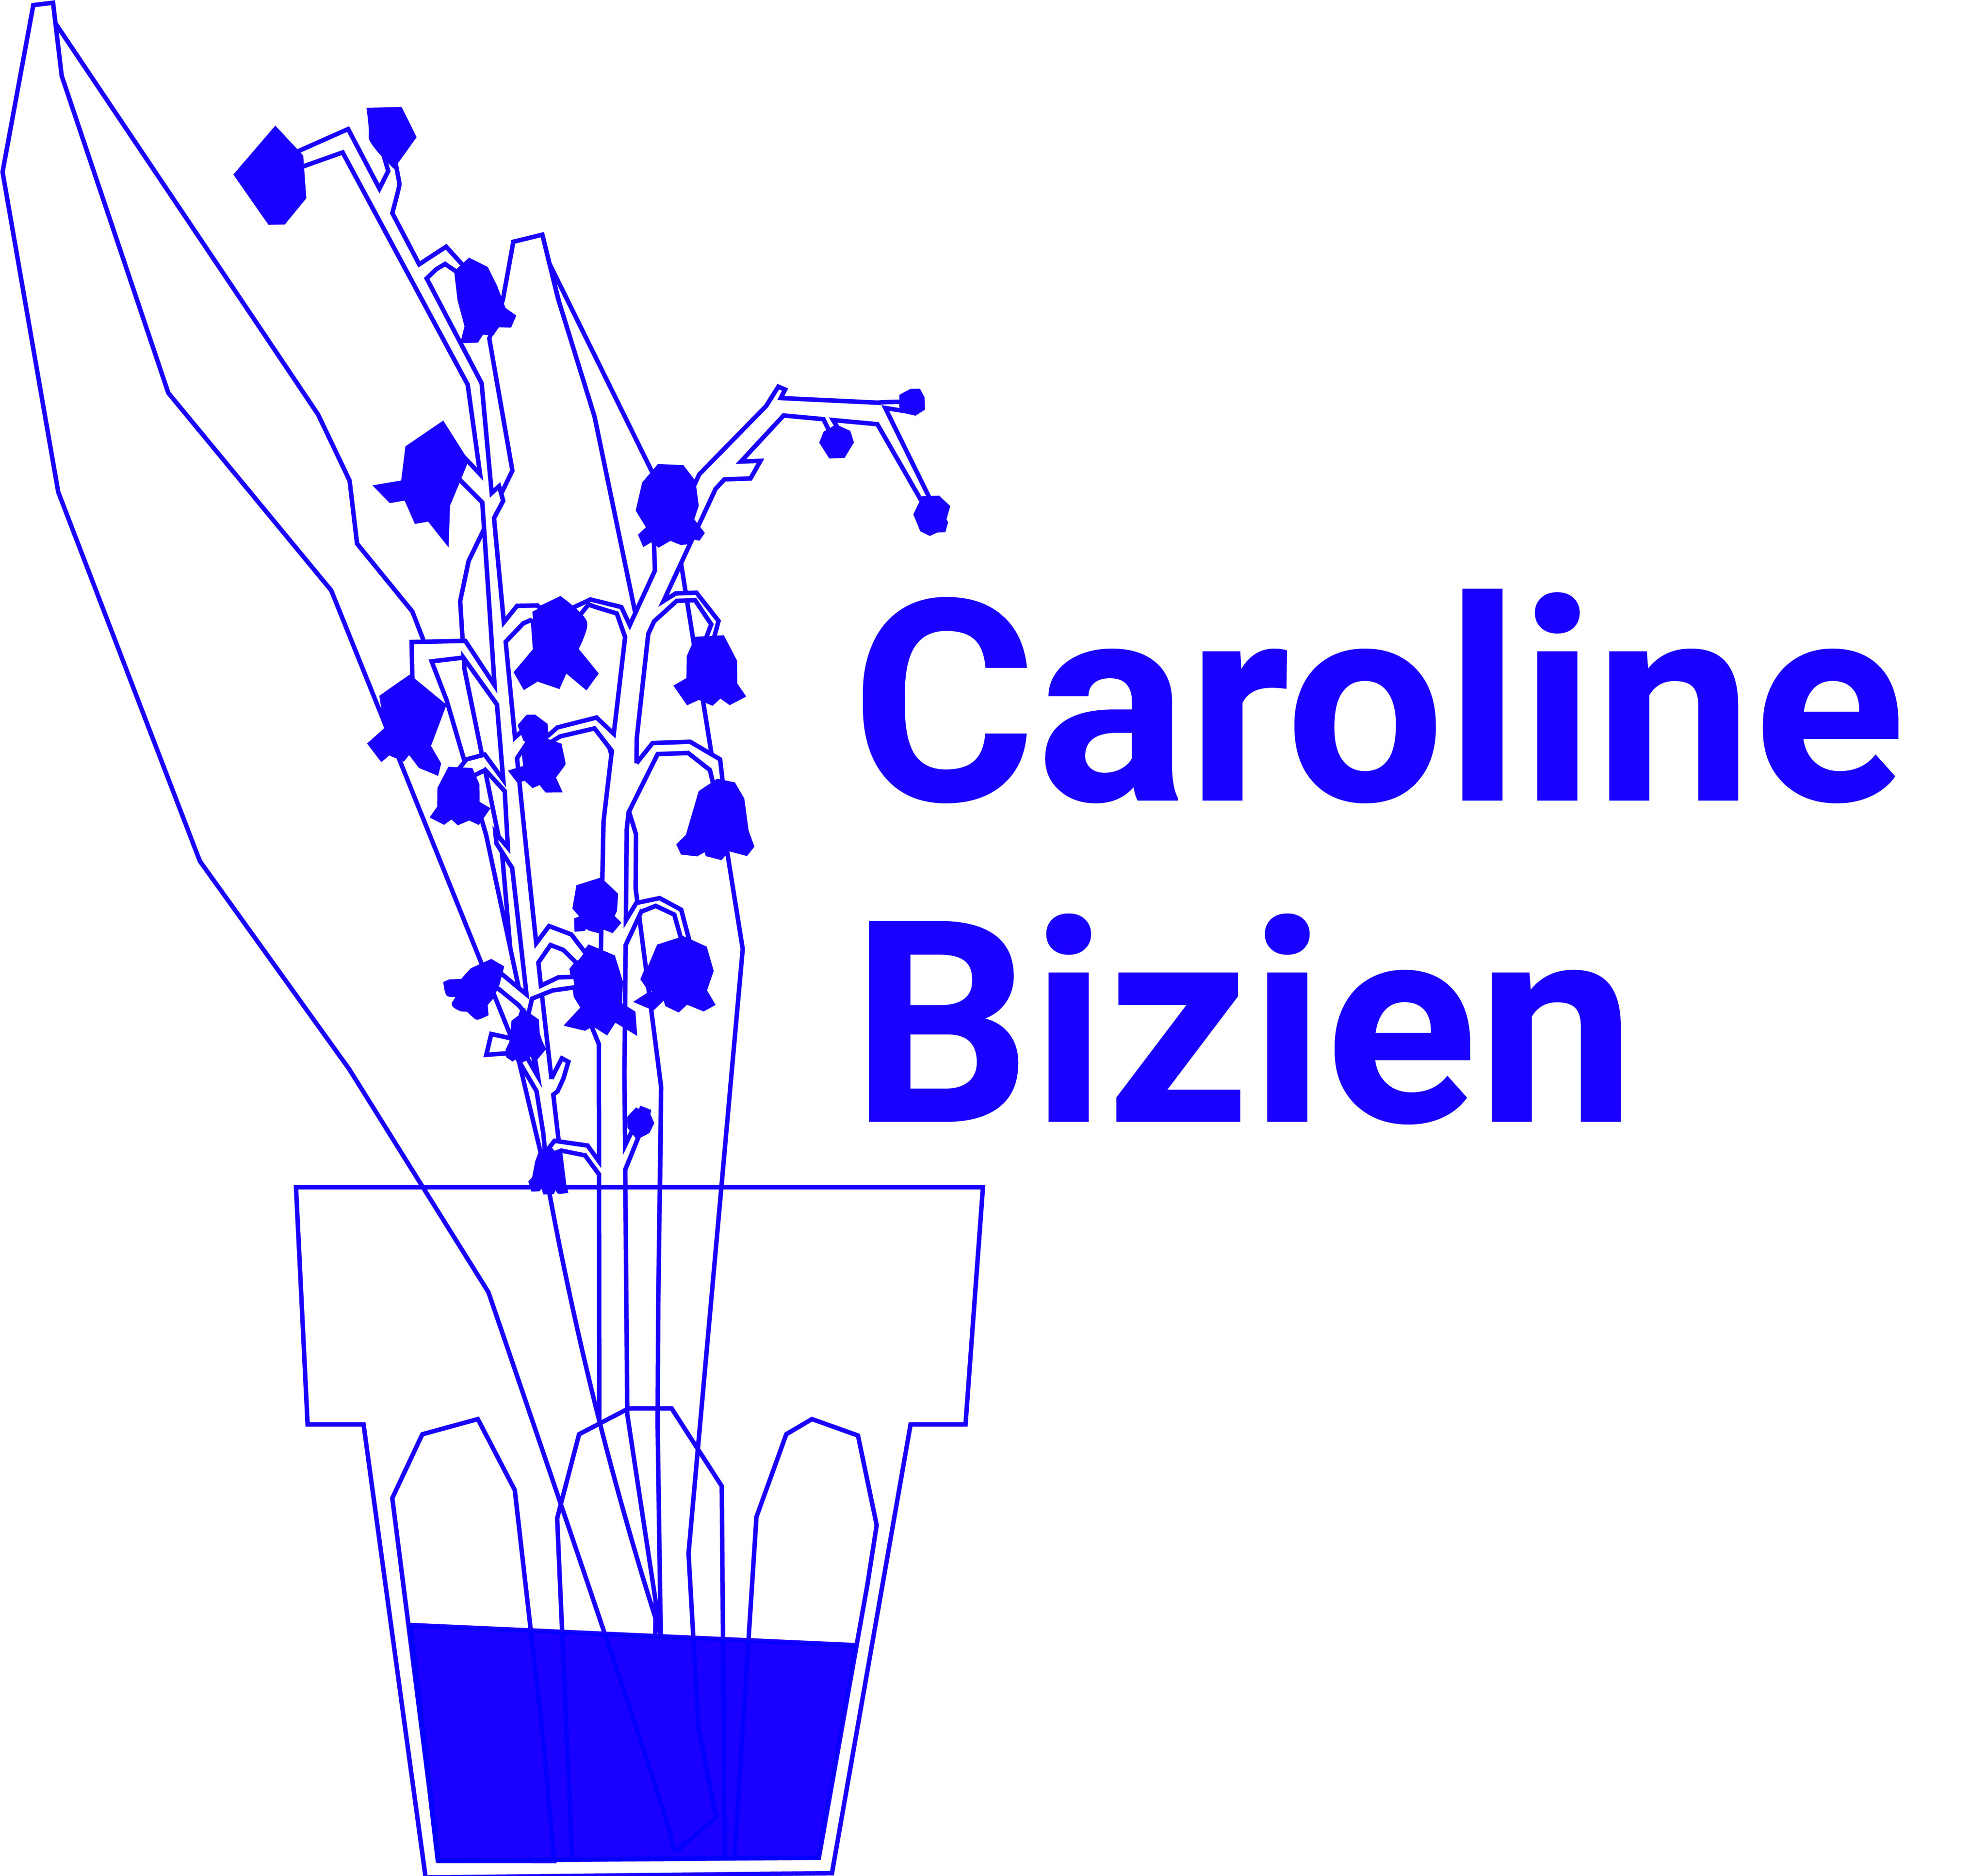 Caroline BIZIEN